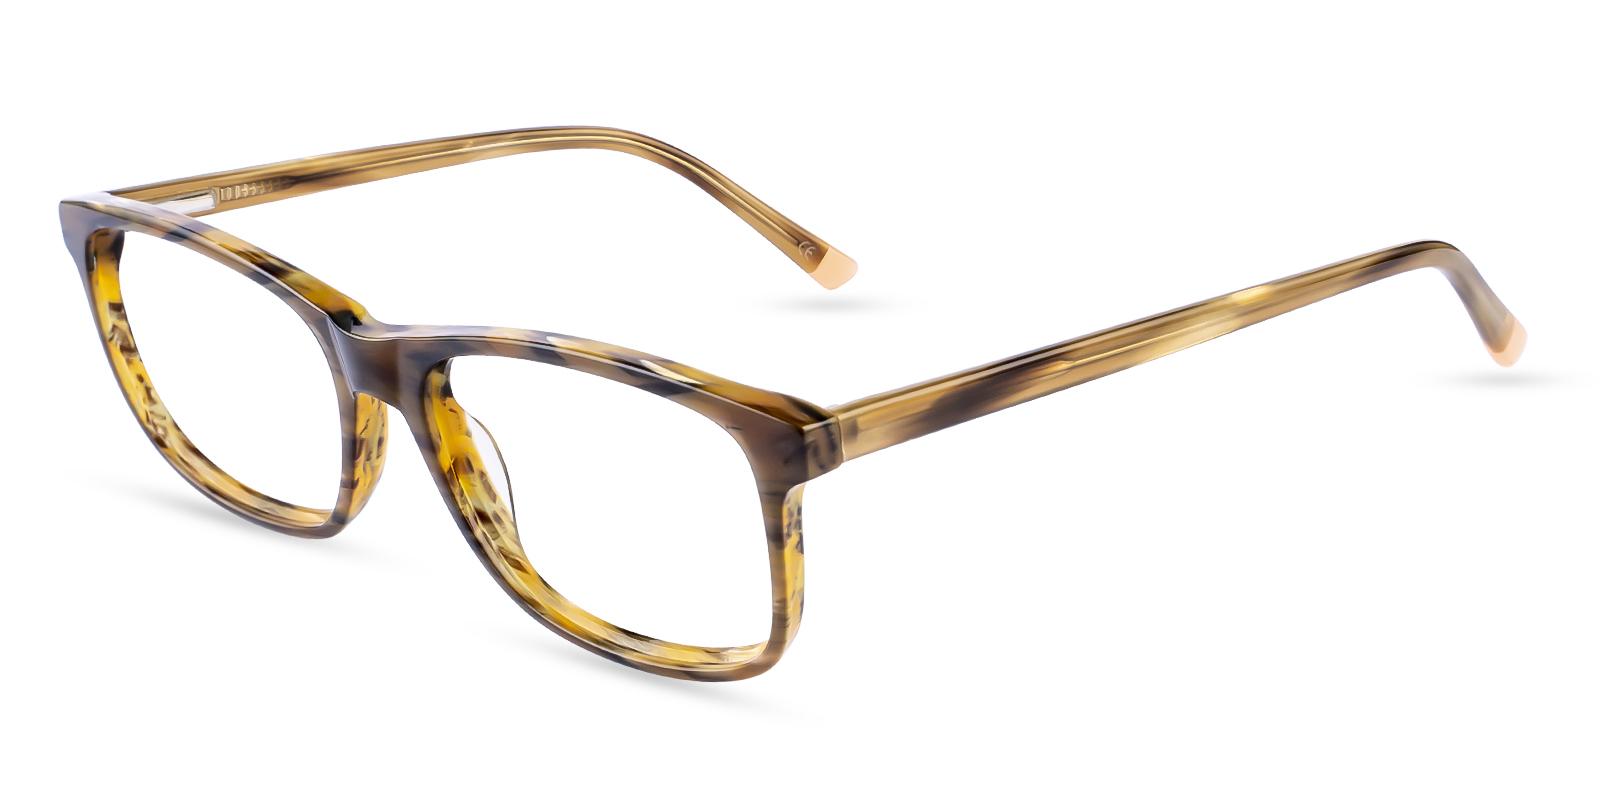 Gilcres Striped Acetate Eyeglasses , SpringHinges , UniversalBridgeFit Frames from ABBE Glasses